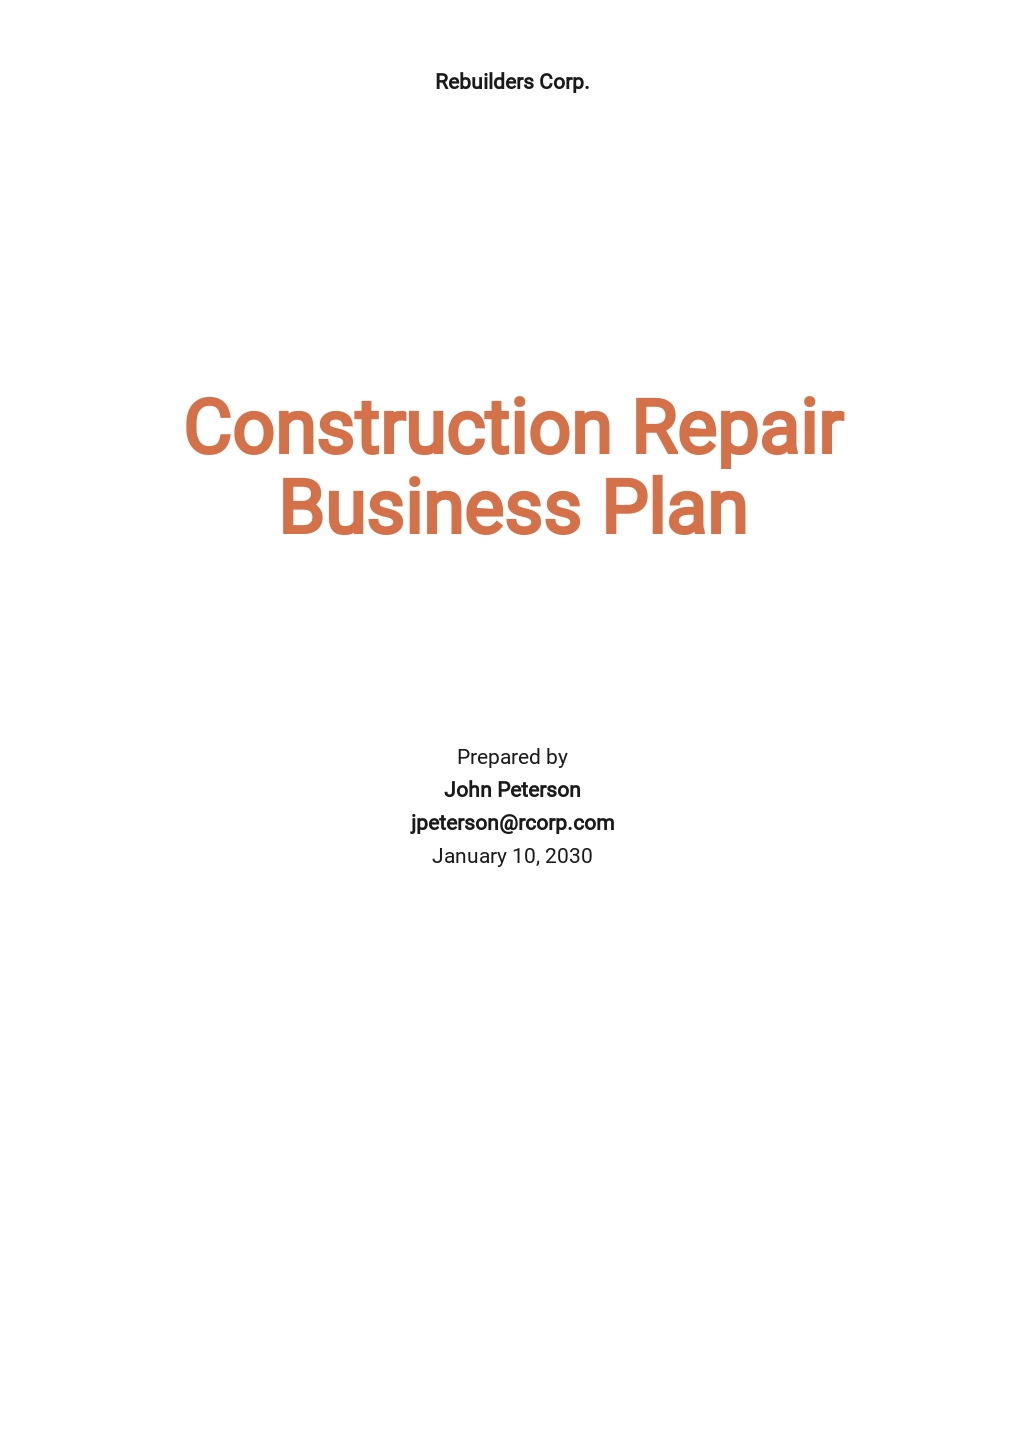 construction business plan pdf free download